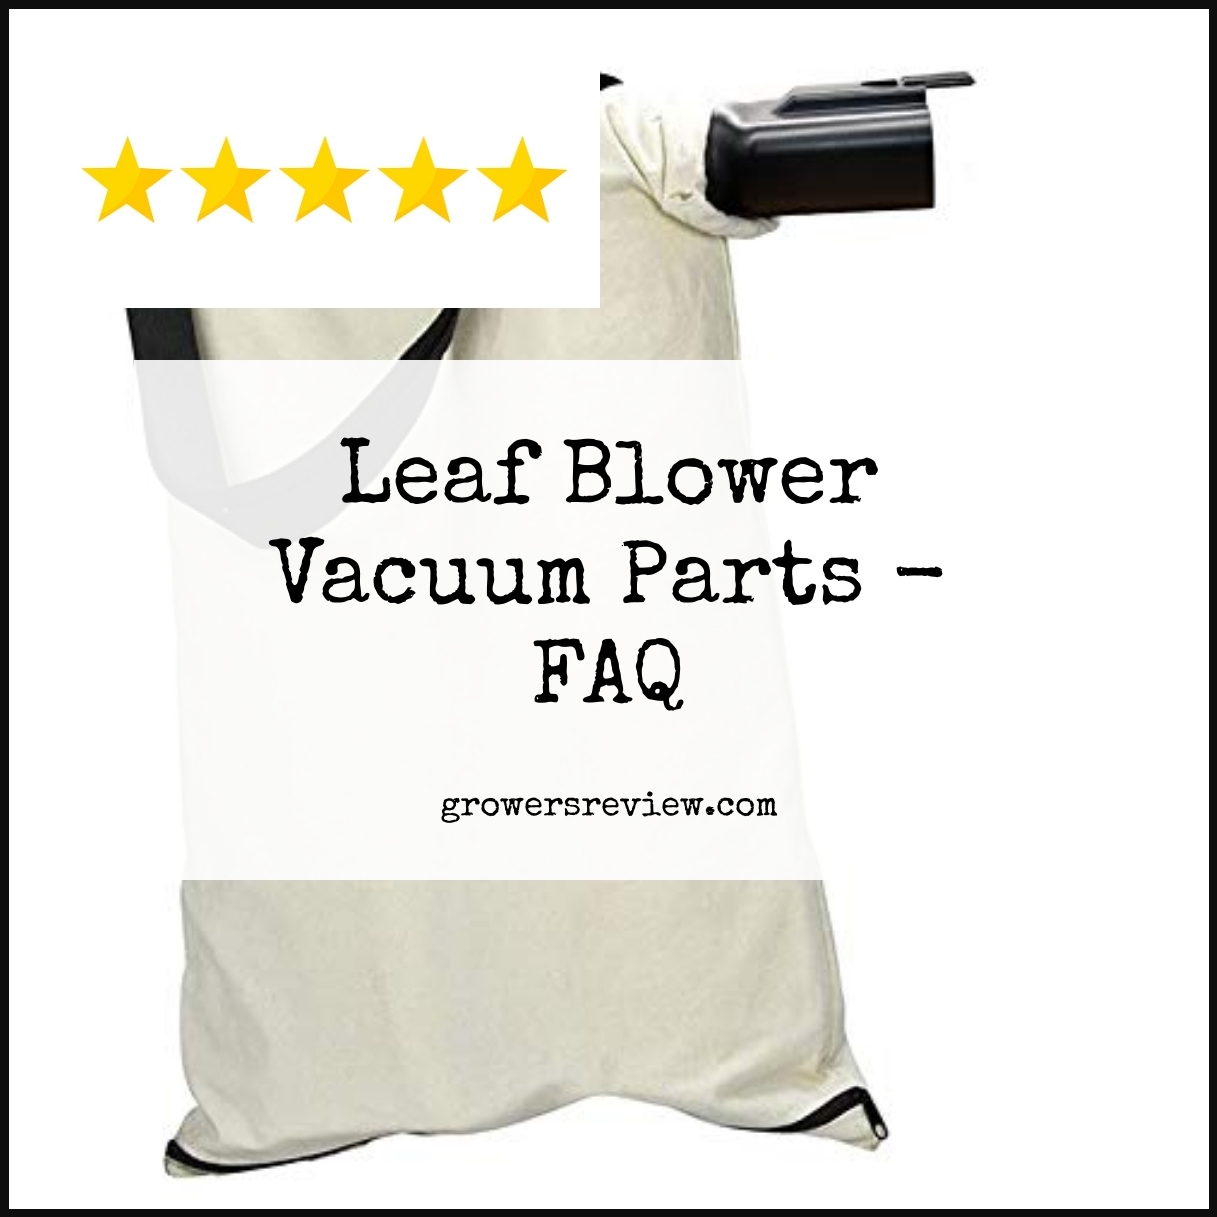 Leaf Blower Vacuum Parts - FAQ